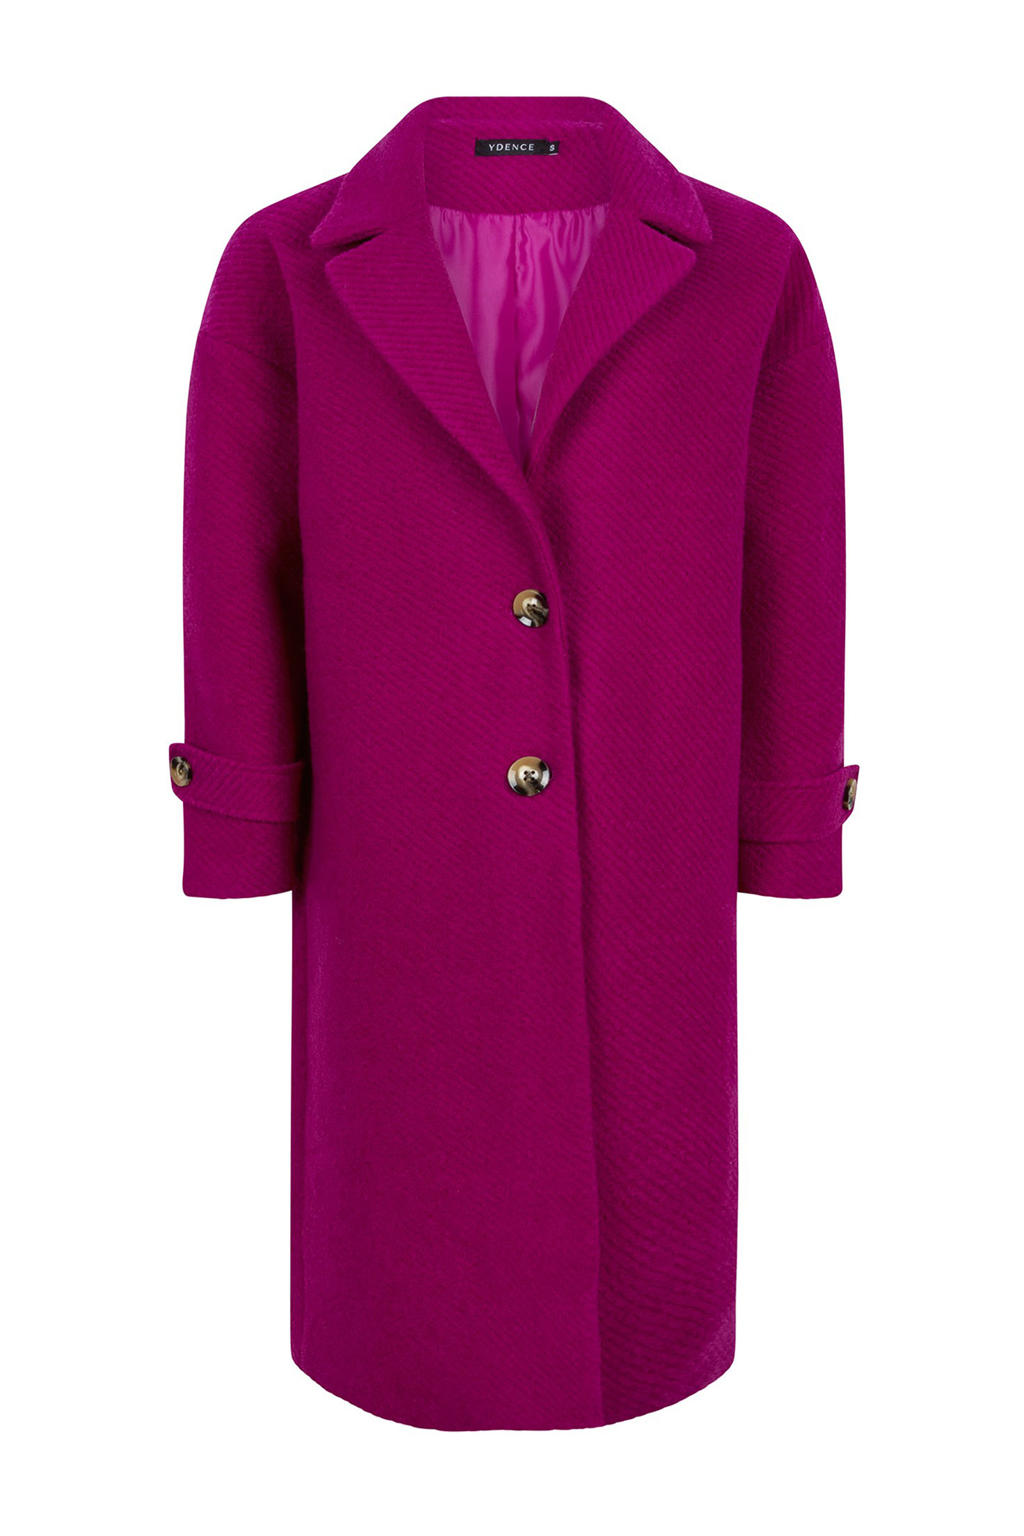 Ydence coat Kirsty purple